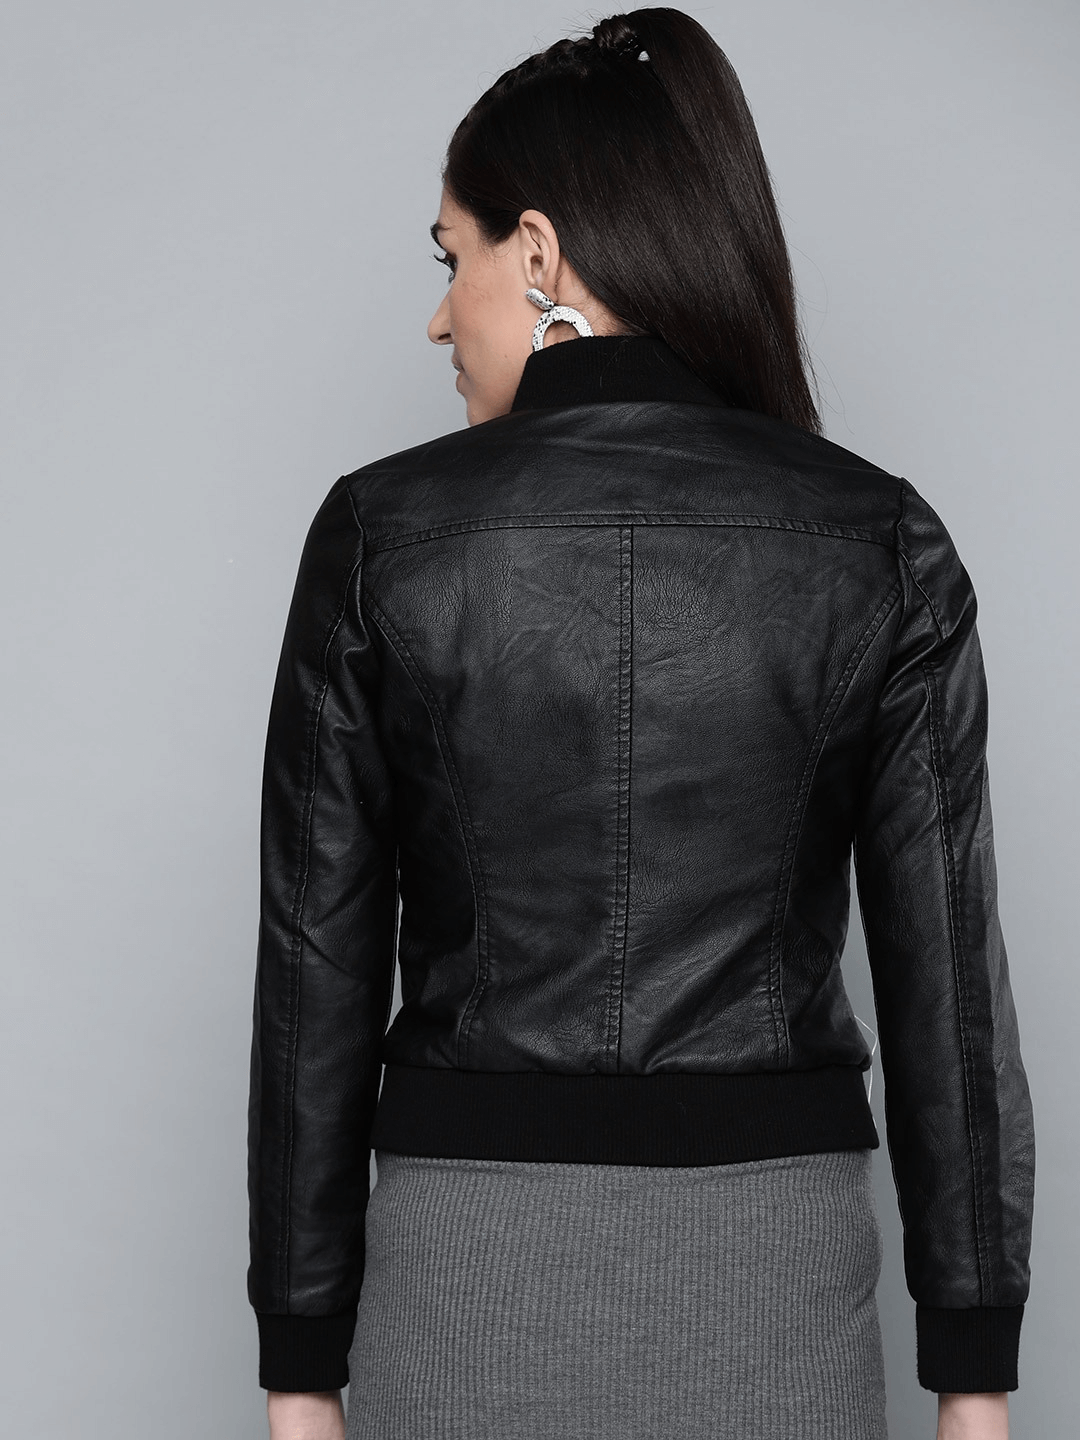 Sculpt Australia womens leather jacket Black Solid Bomber Leather Jacket